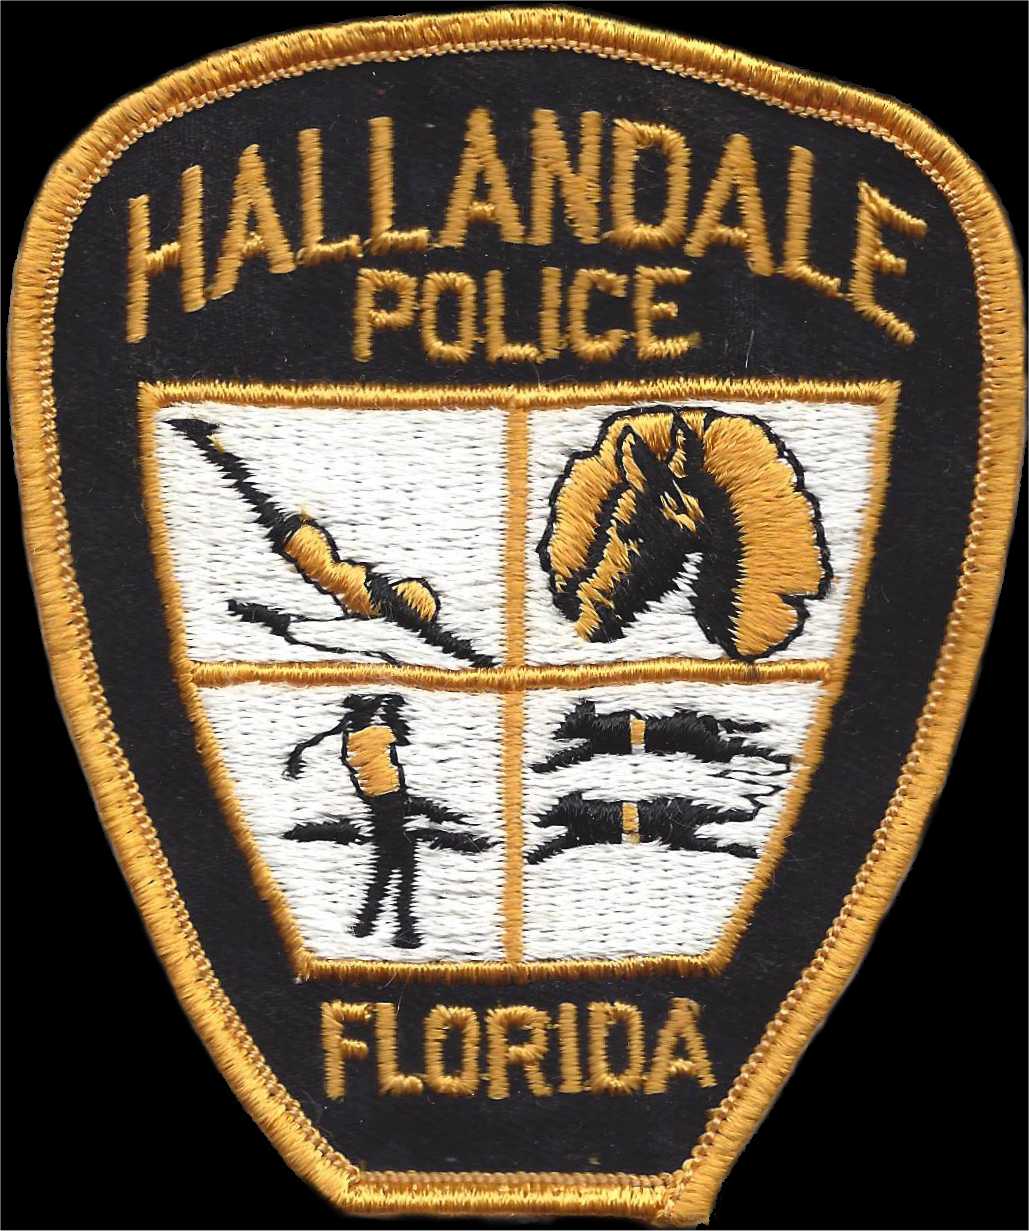 Hallandale Police Department